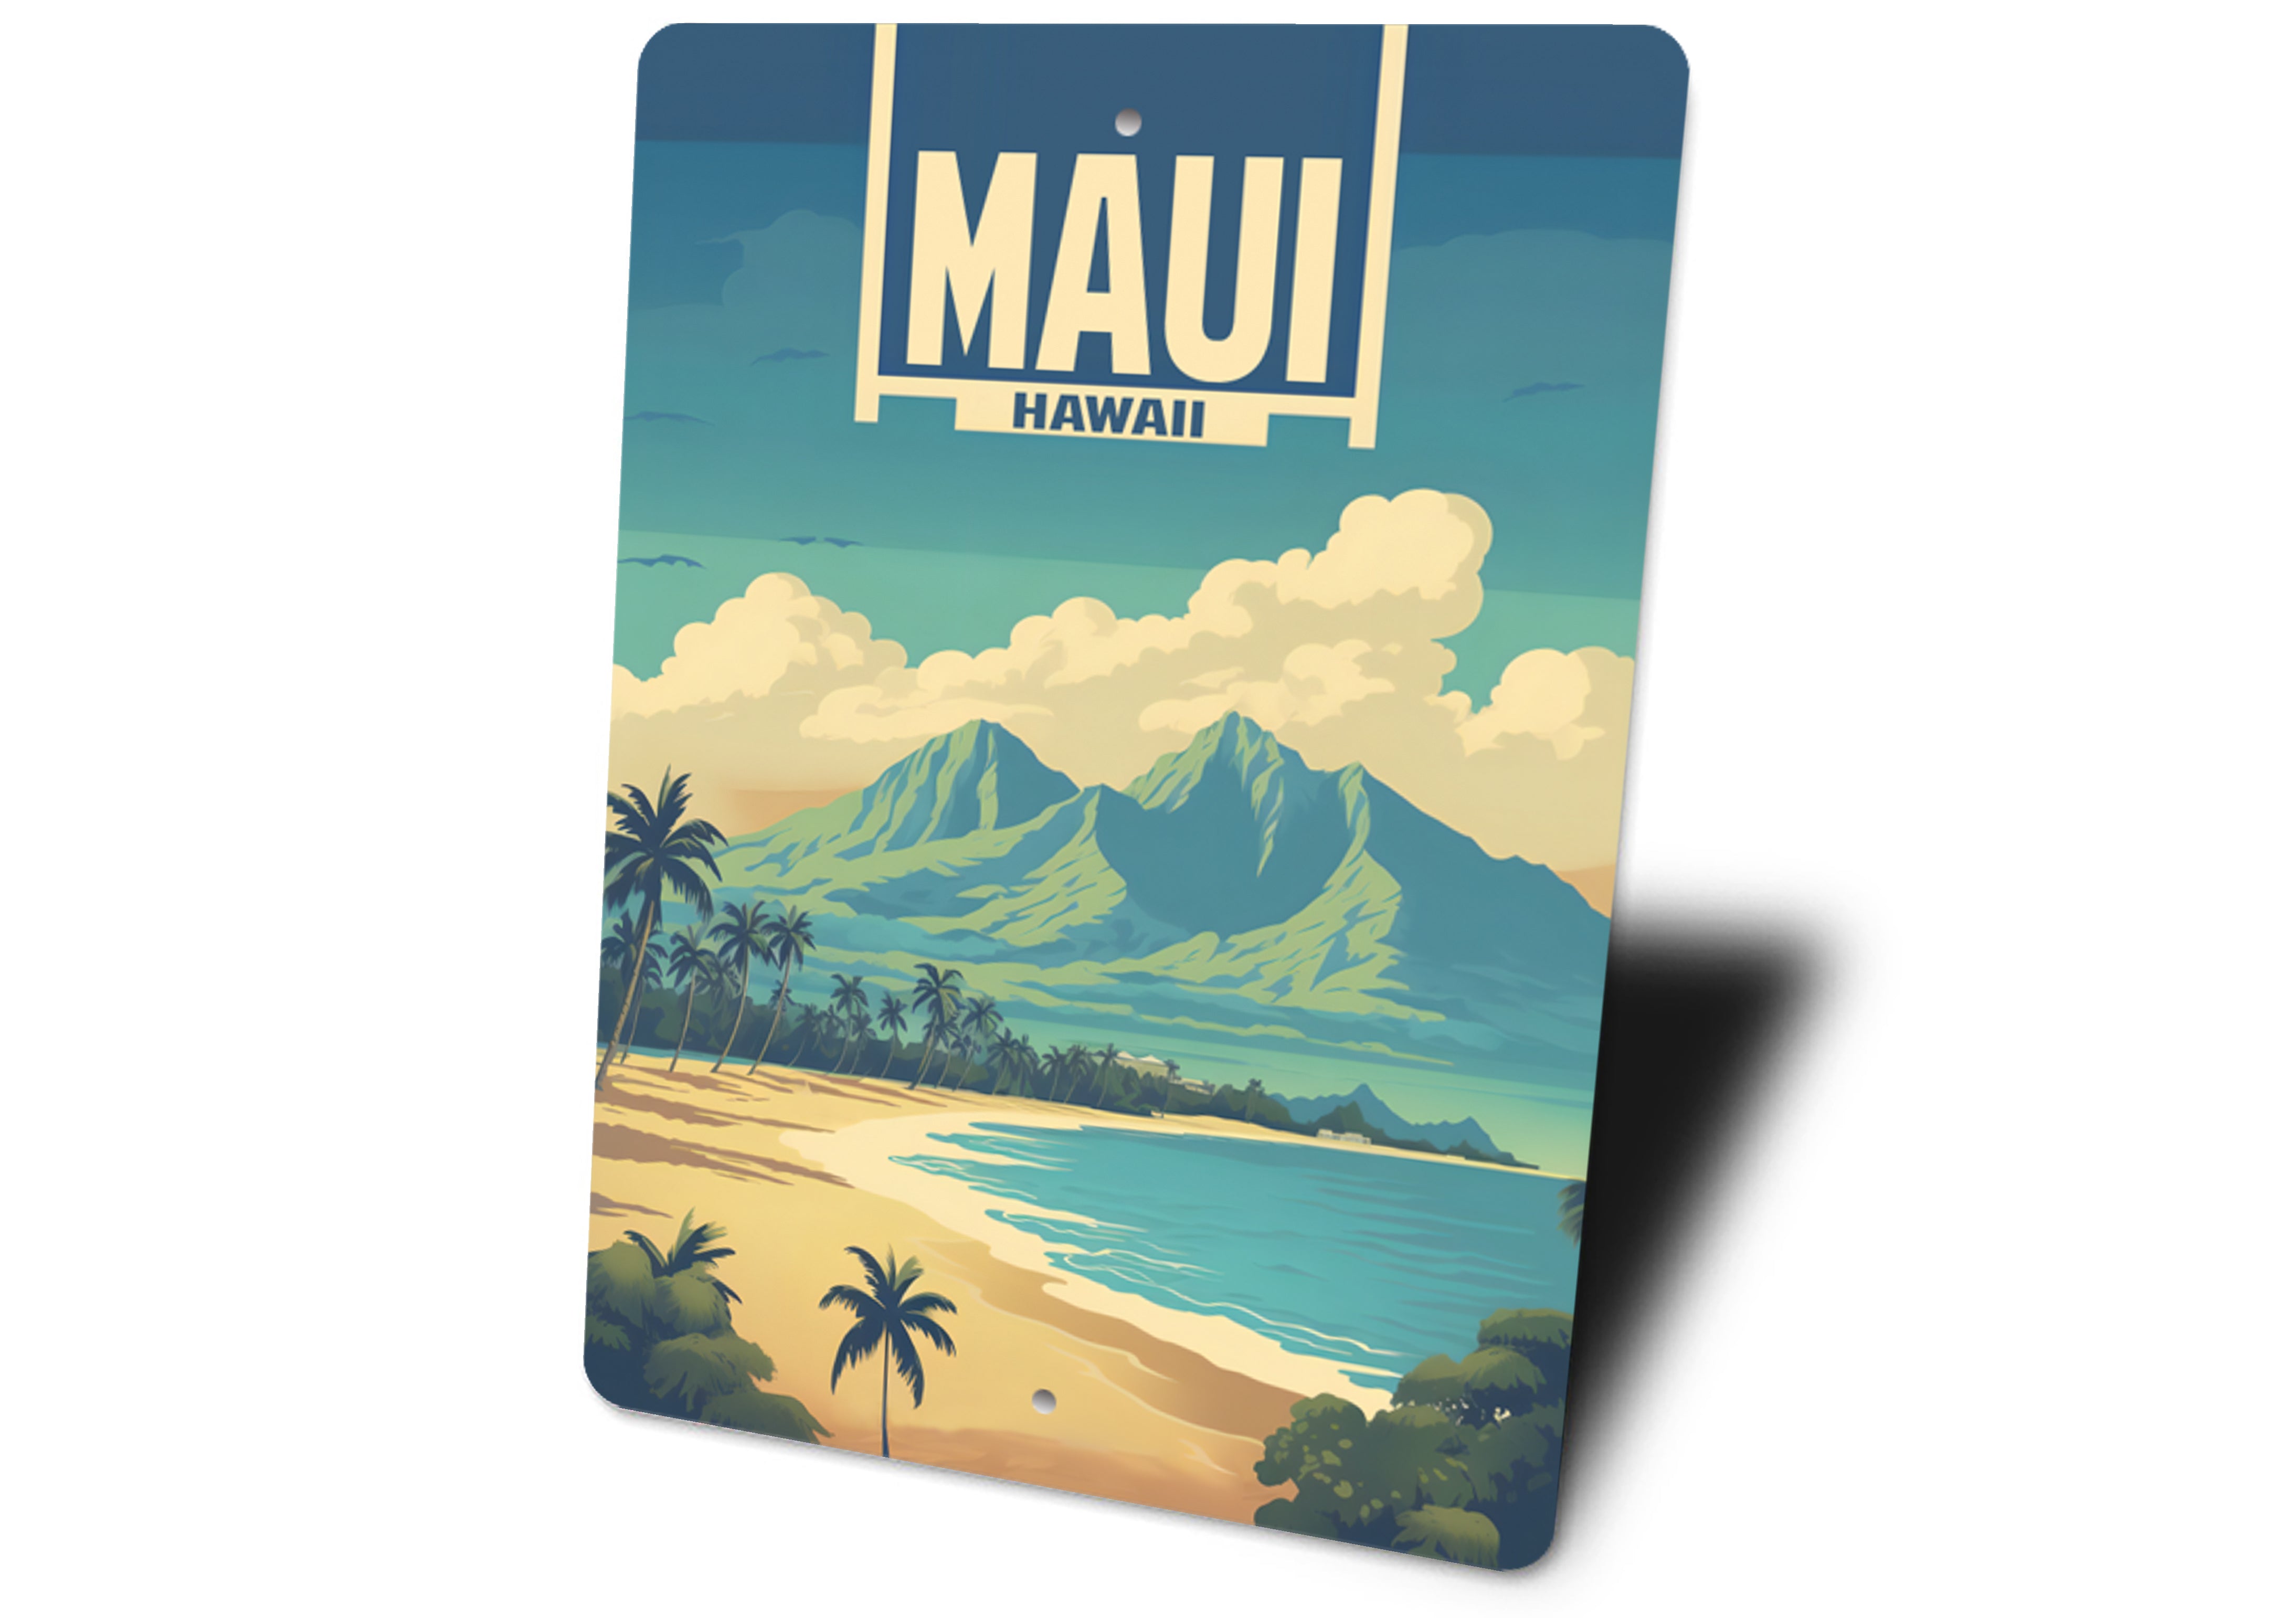 Maui Hawaii Beach Sign